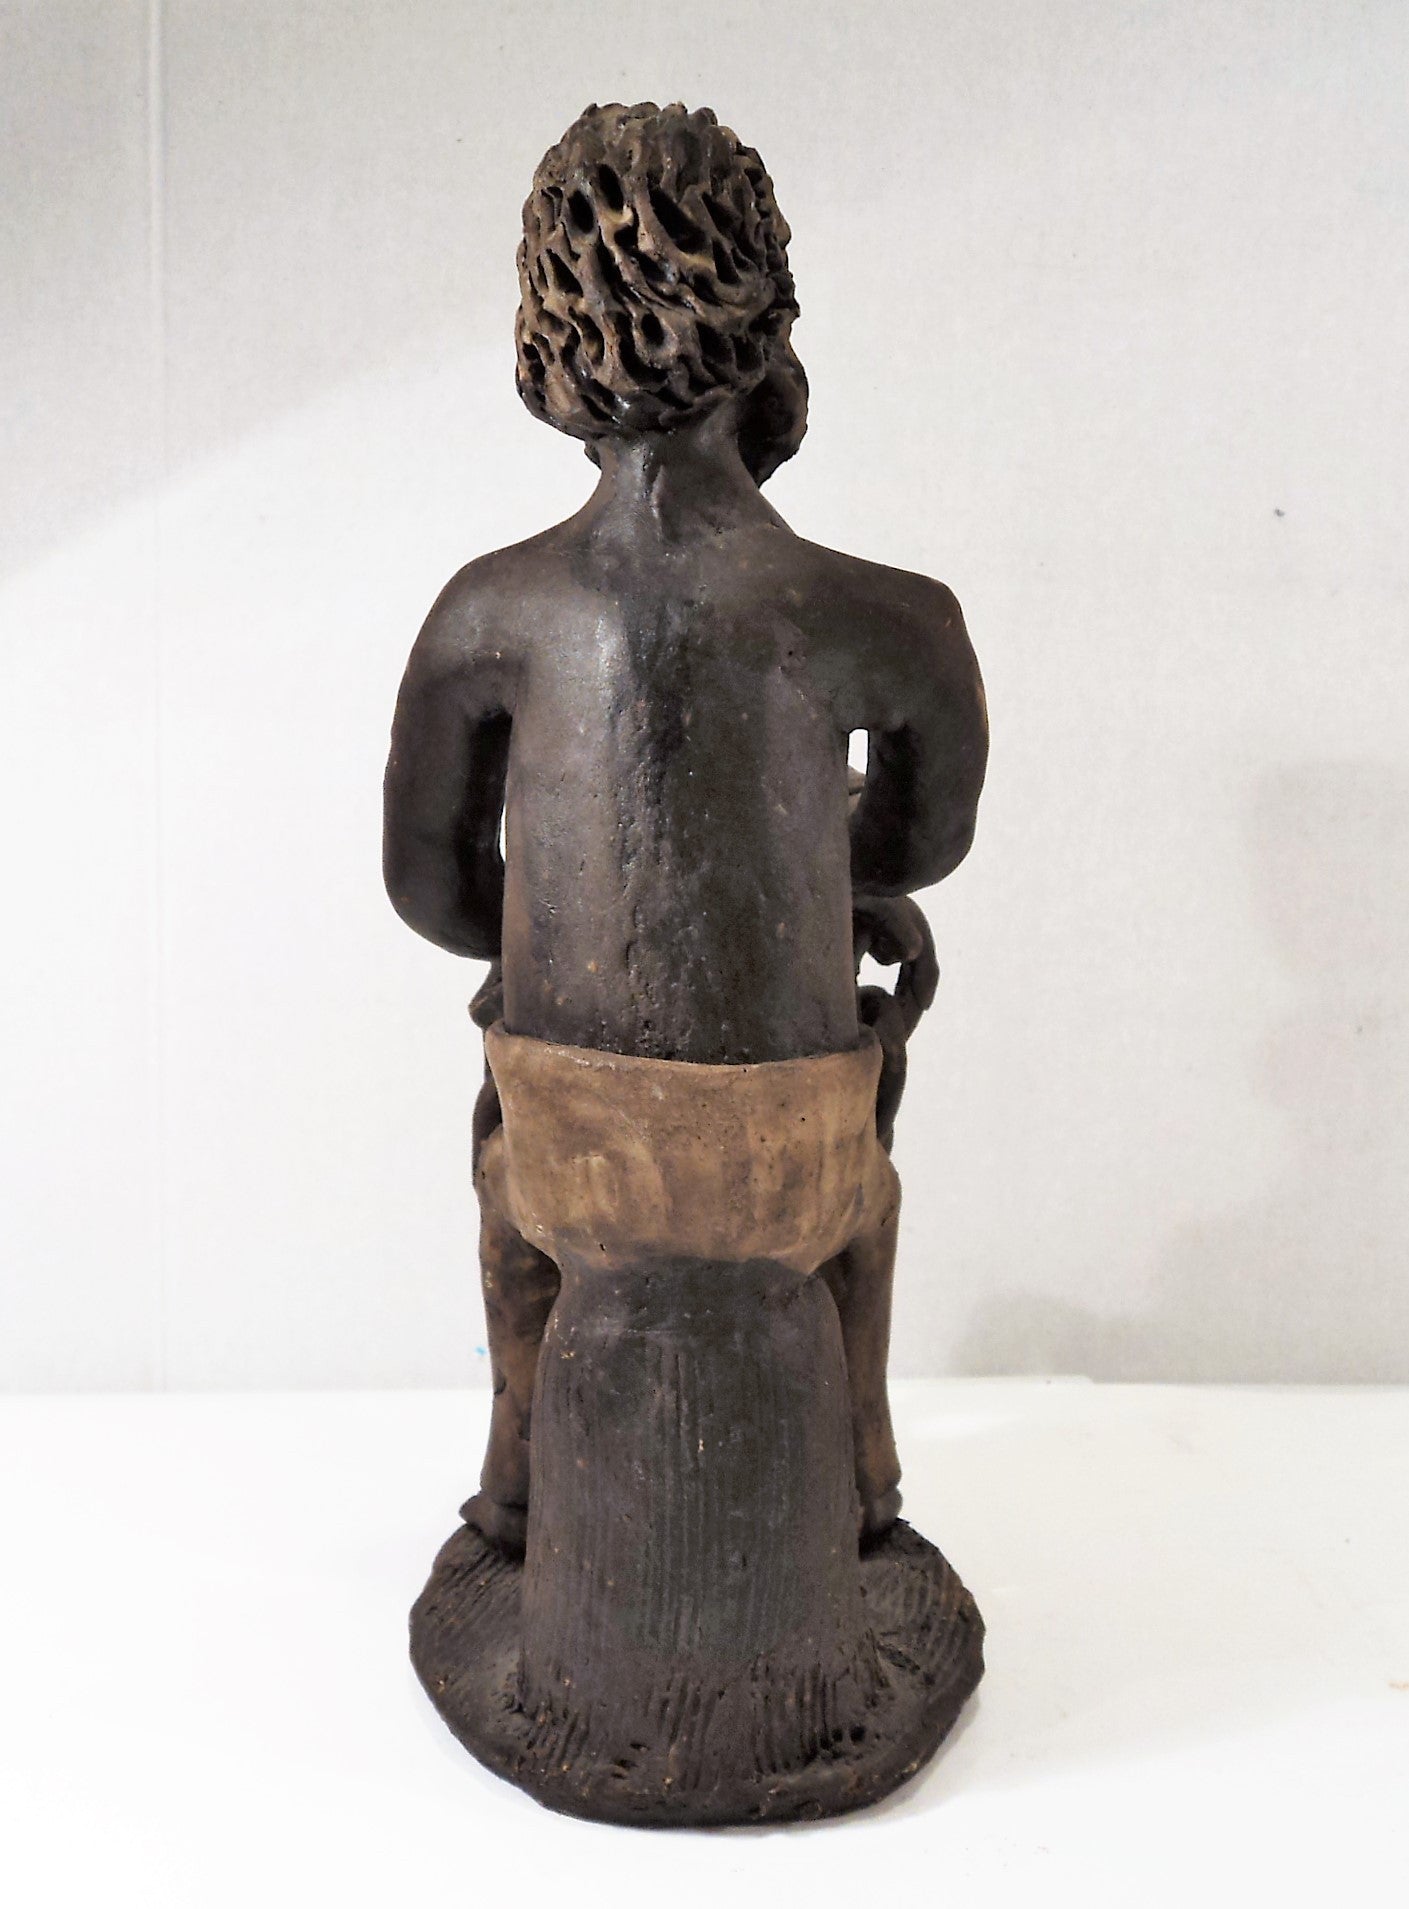 Black Americana Slave in Chains Sculpture